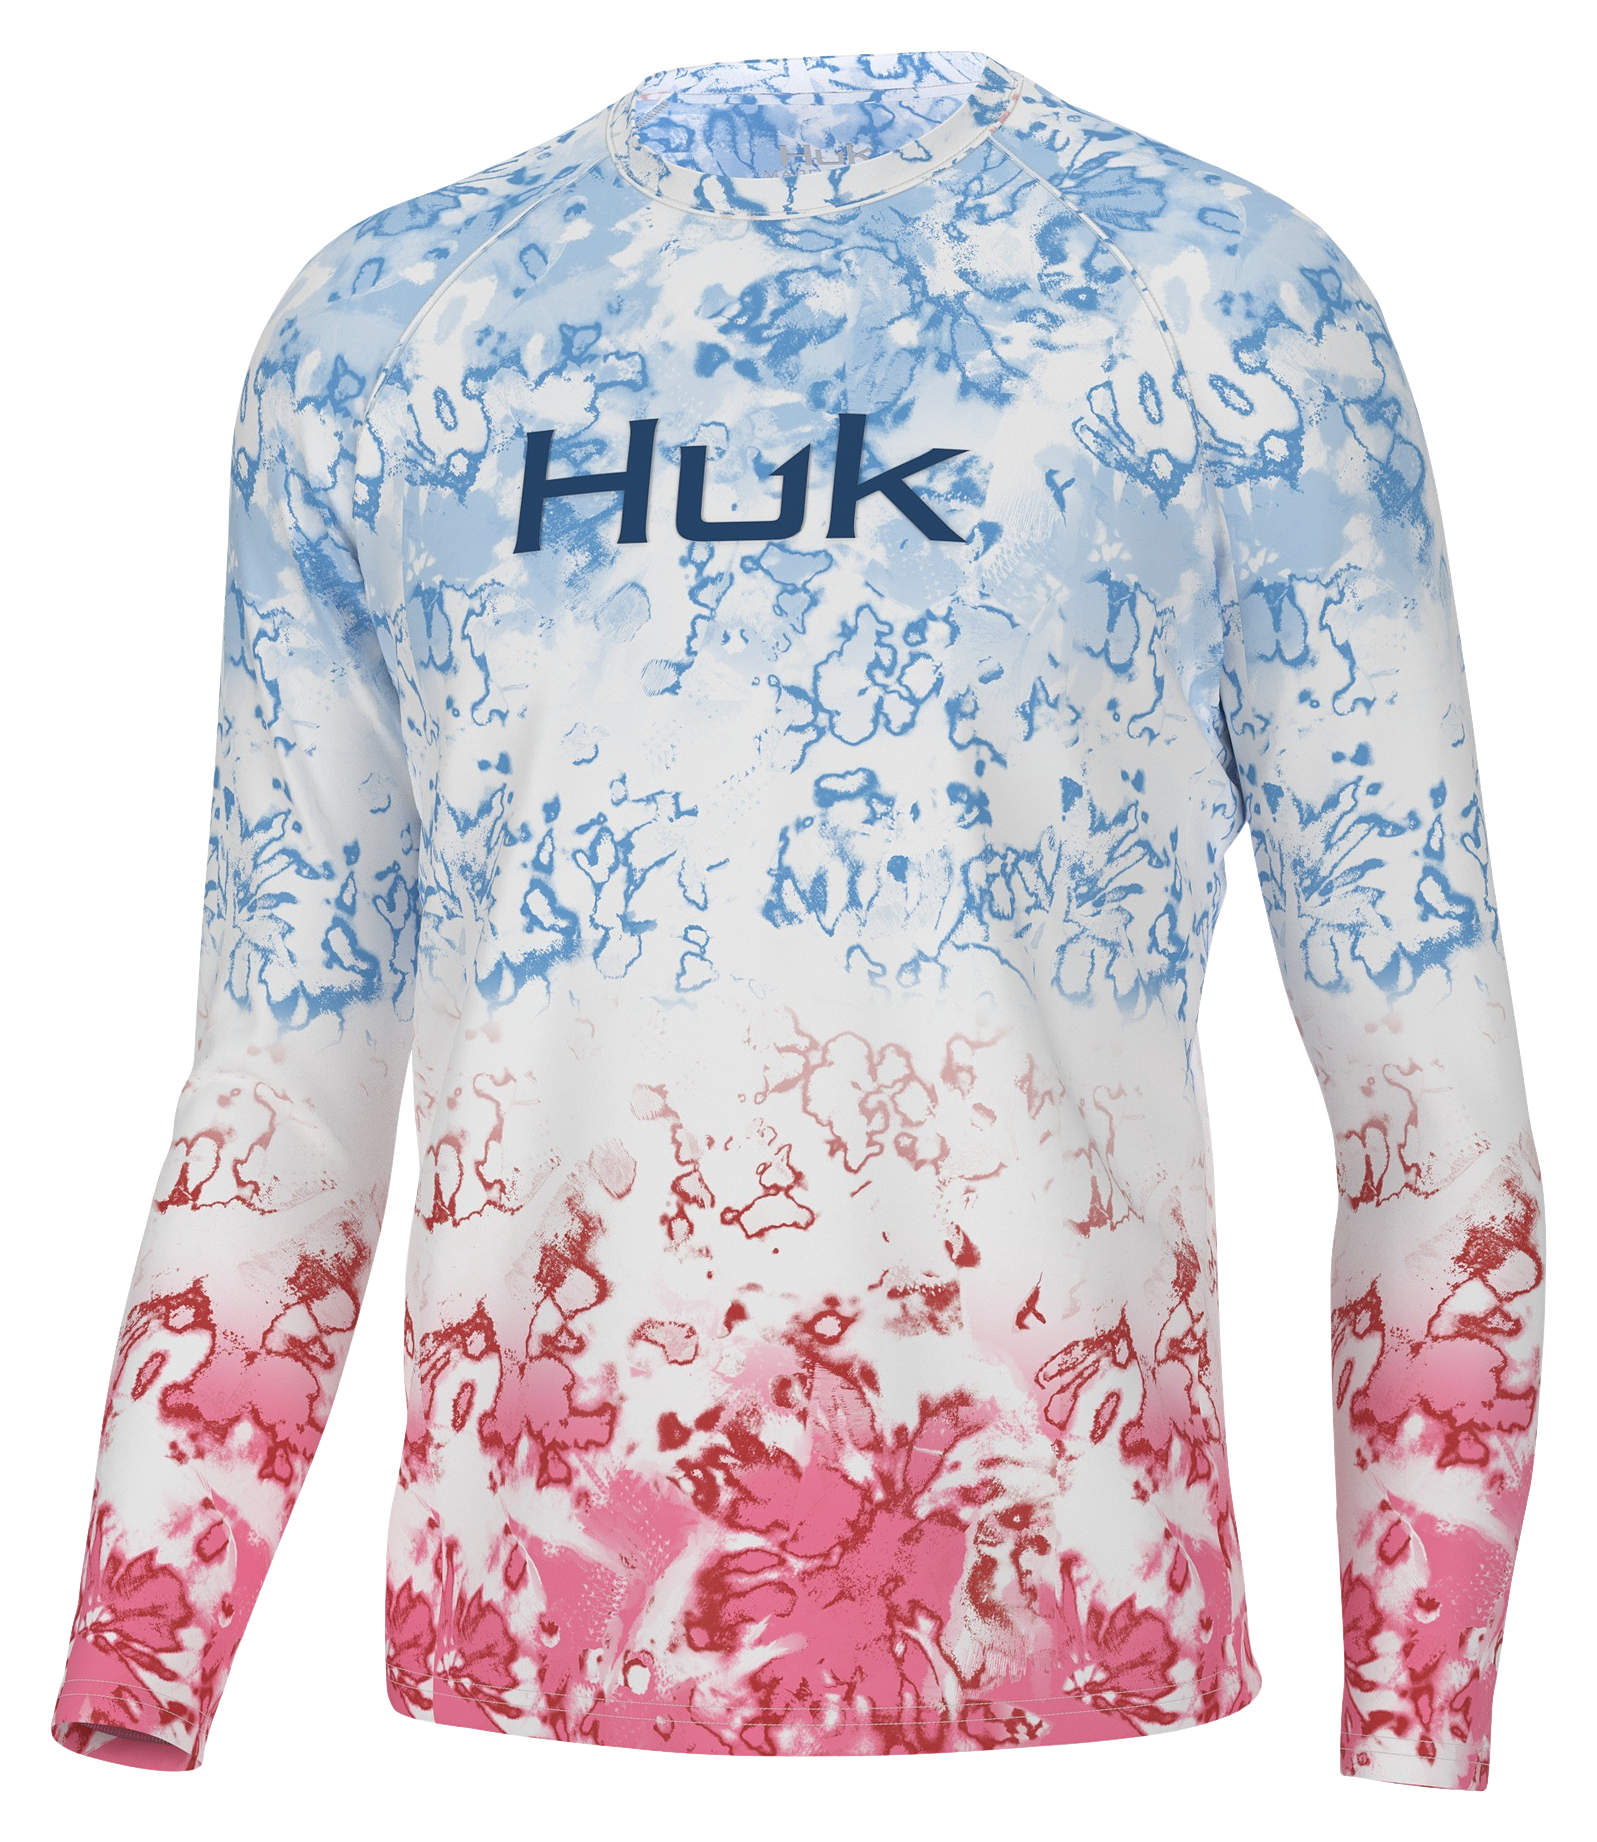 Huk Fade Pursuit Fin Fade Long-Sleeve Shirt for Men